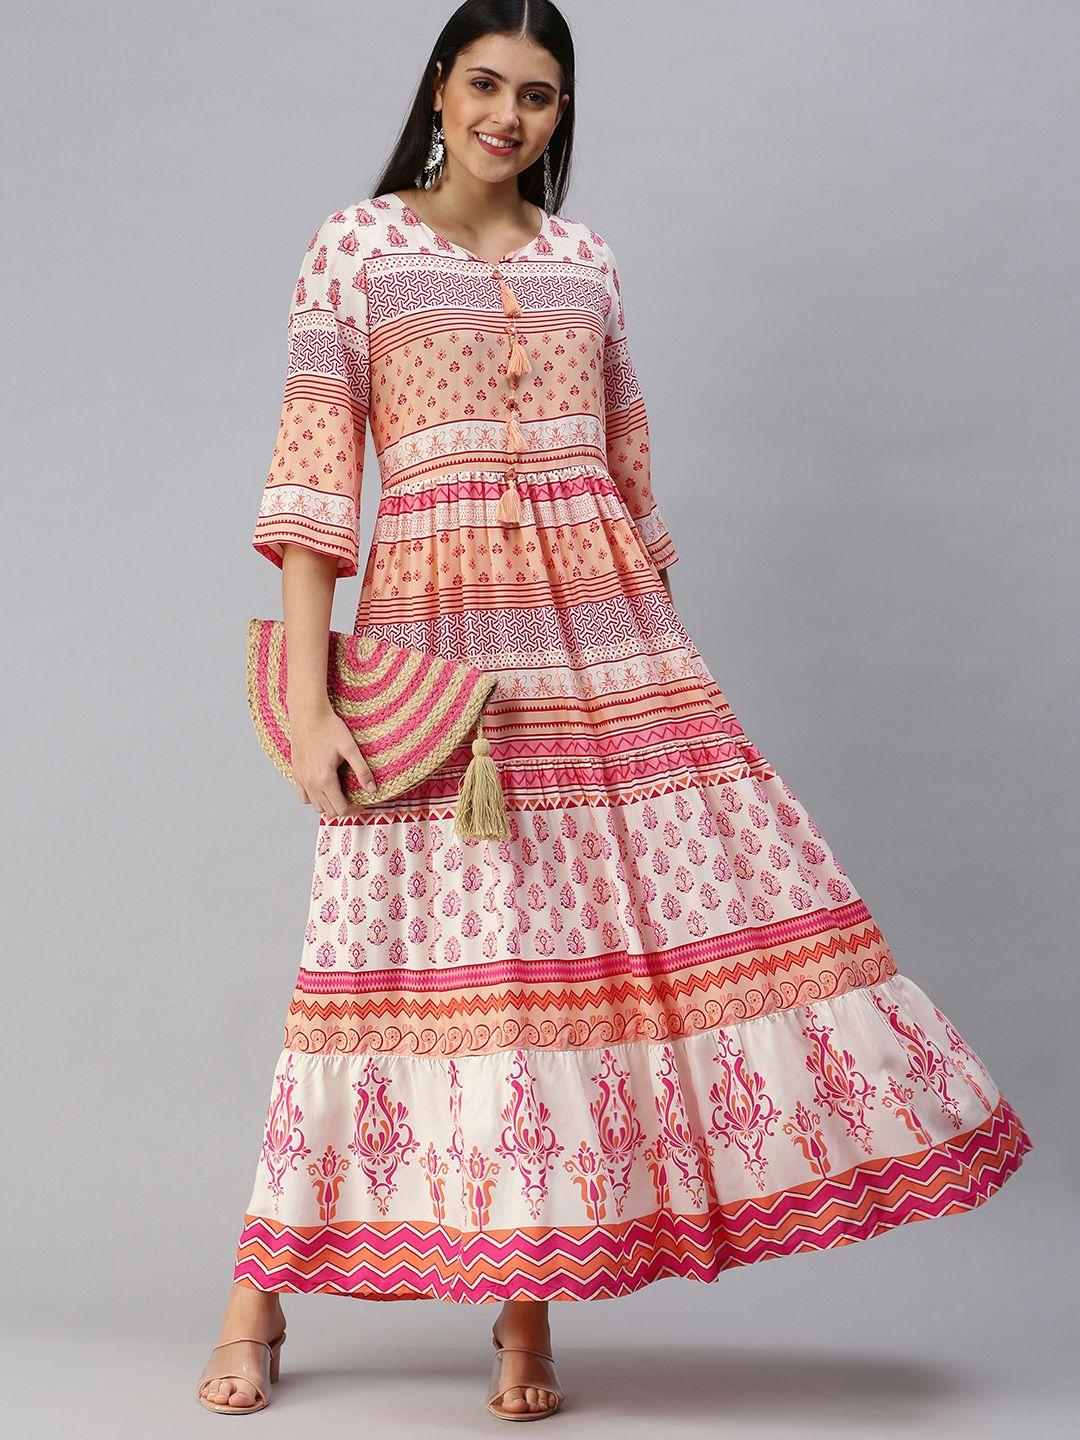 etiquette white & pink ethnic motifs ethnic maxi dress